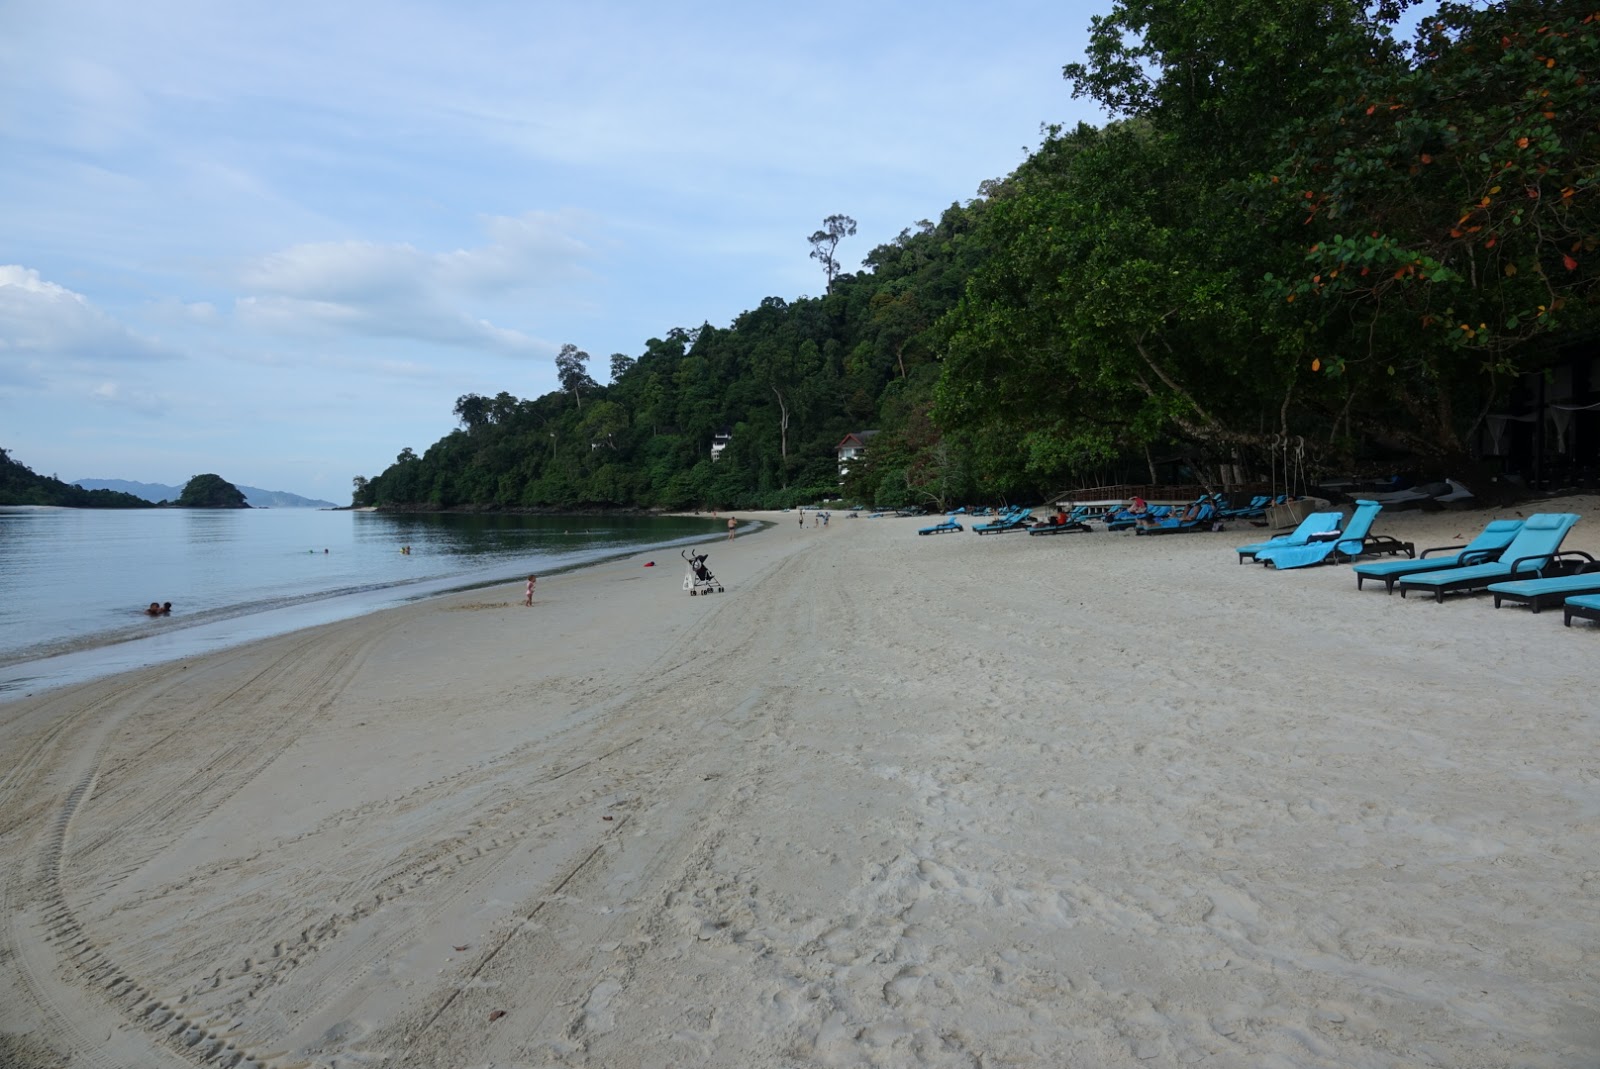 Foto av Datai Bay Beach med hög nivå av renlighet